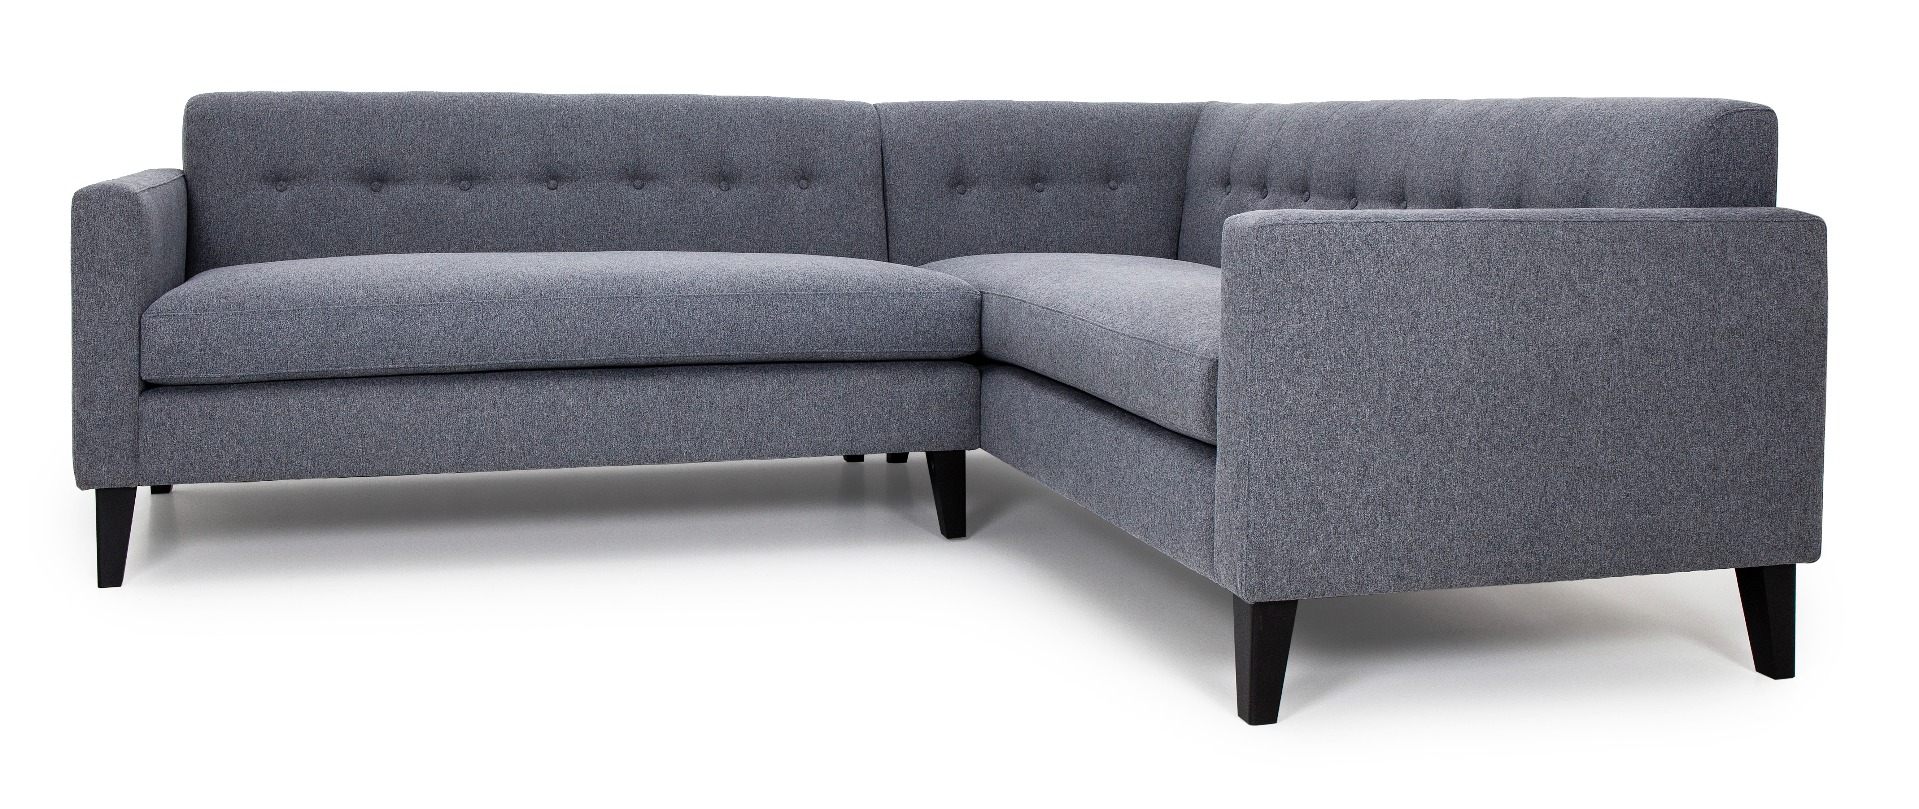 Luxury grey Meshal corner sofa by Luxuria London